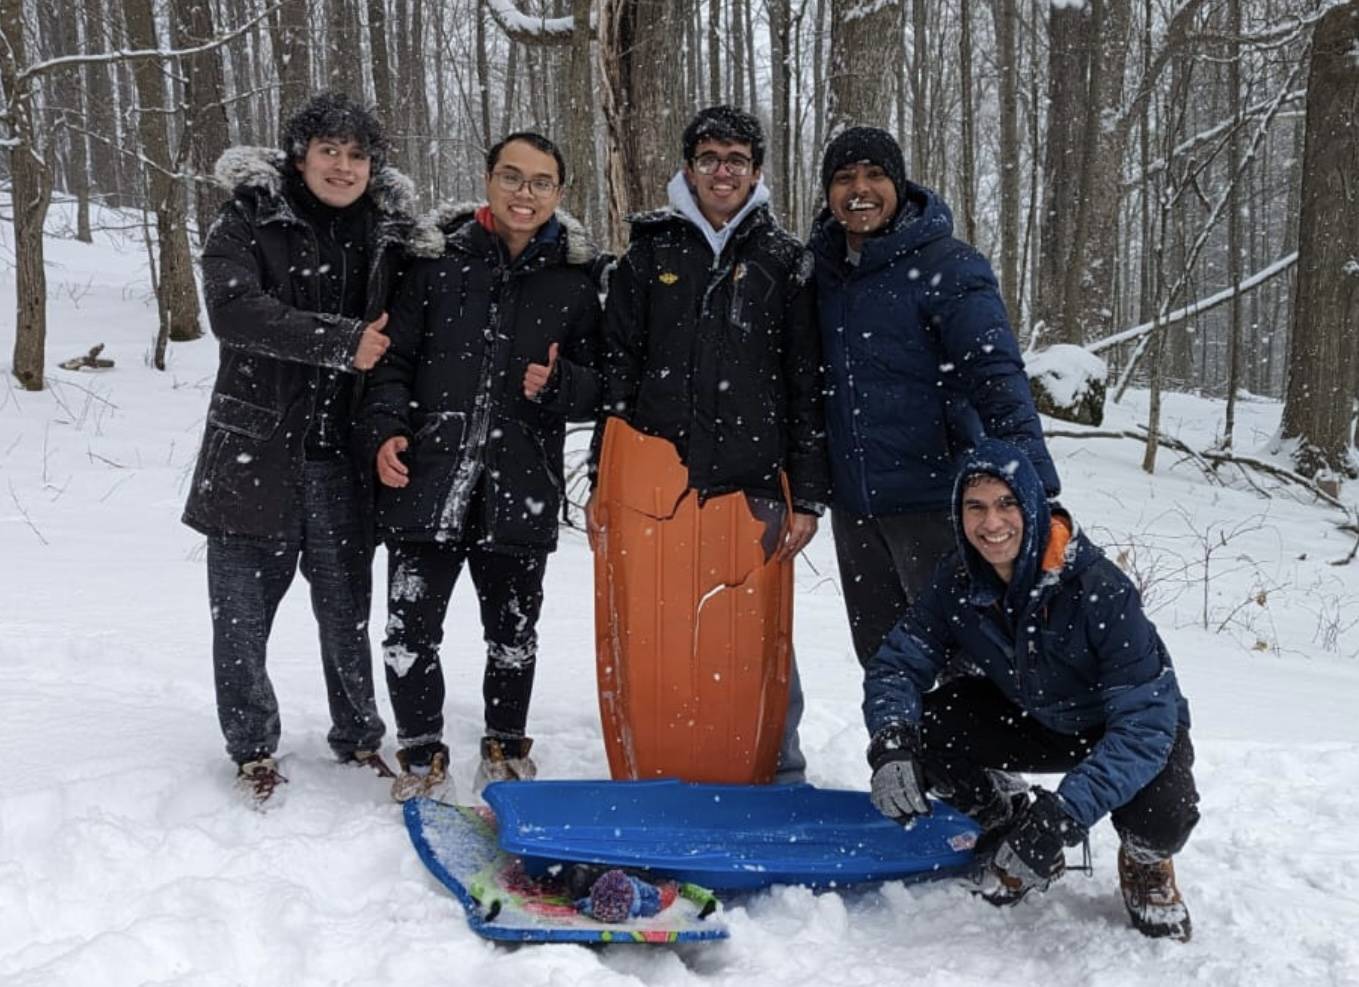 Nilesh and friends enjoying a fresh snowfall on campus